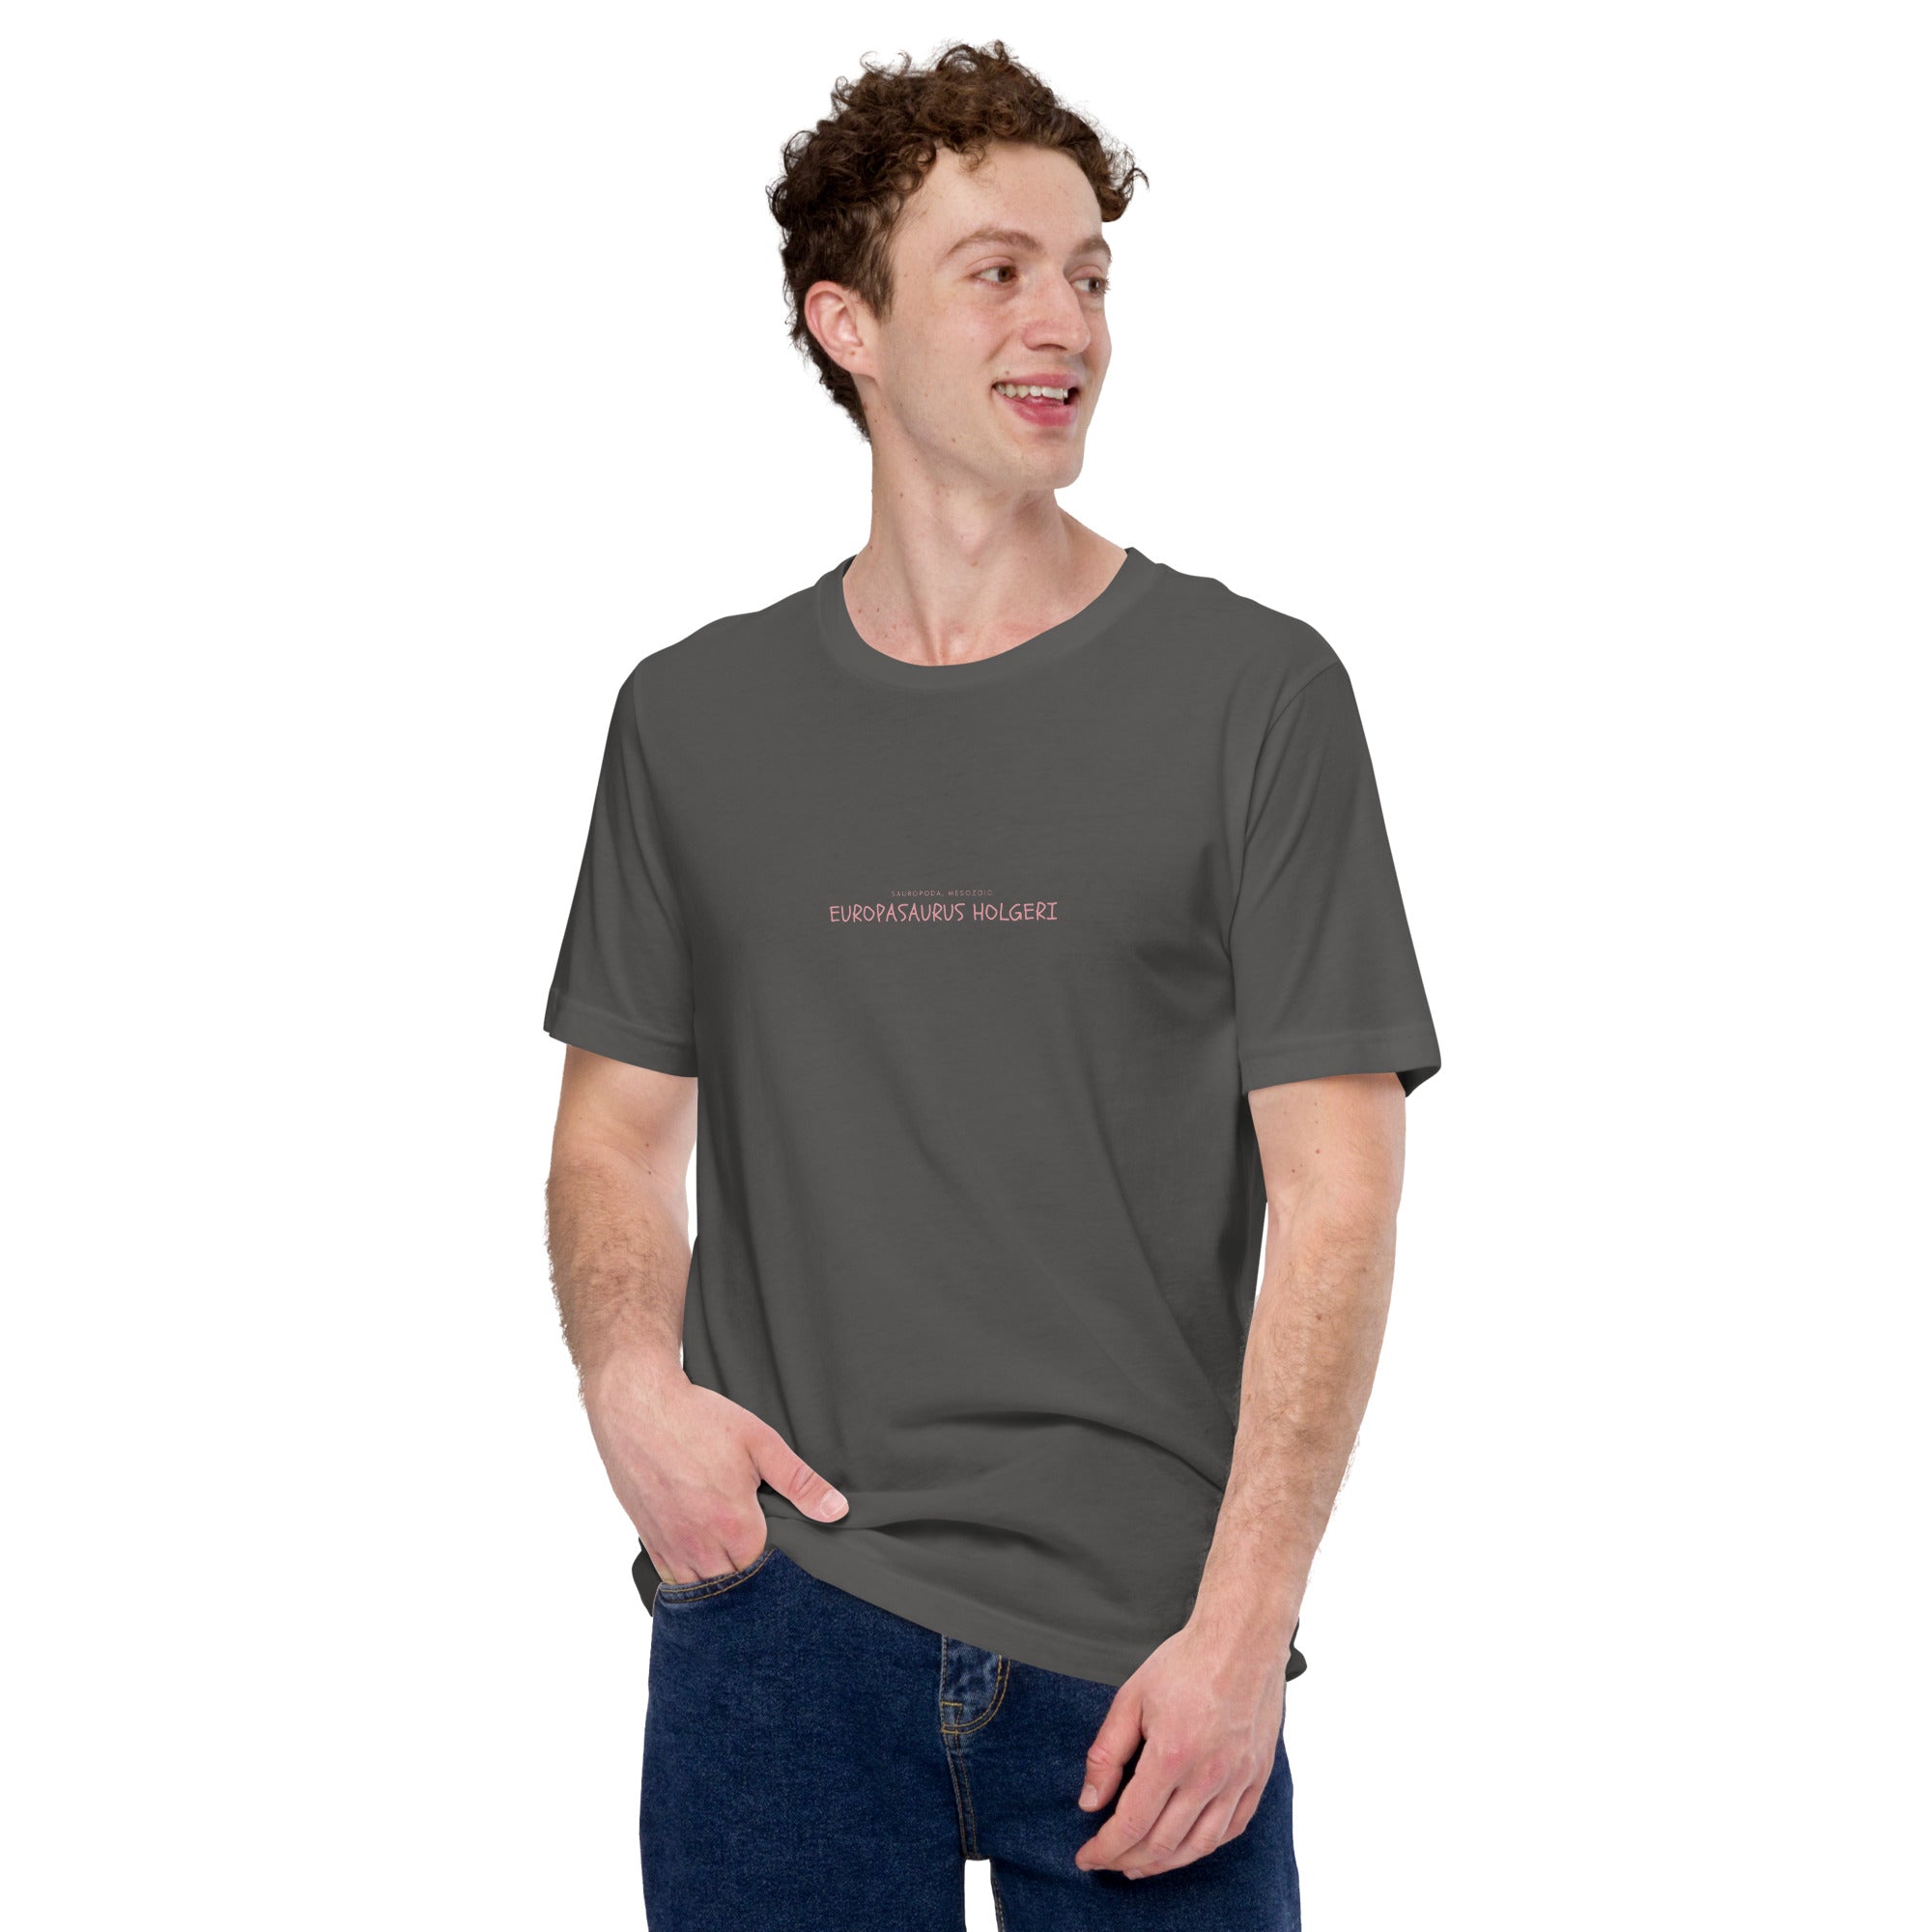 Camiseta unisex con texto "Europasaurus holgeri"